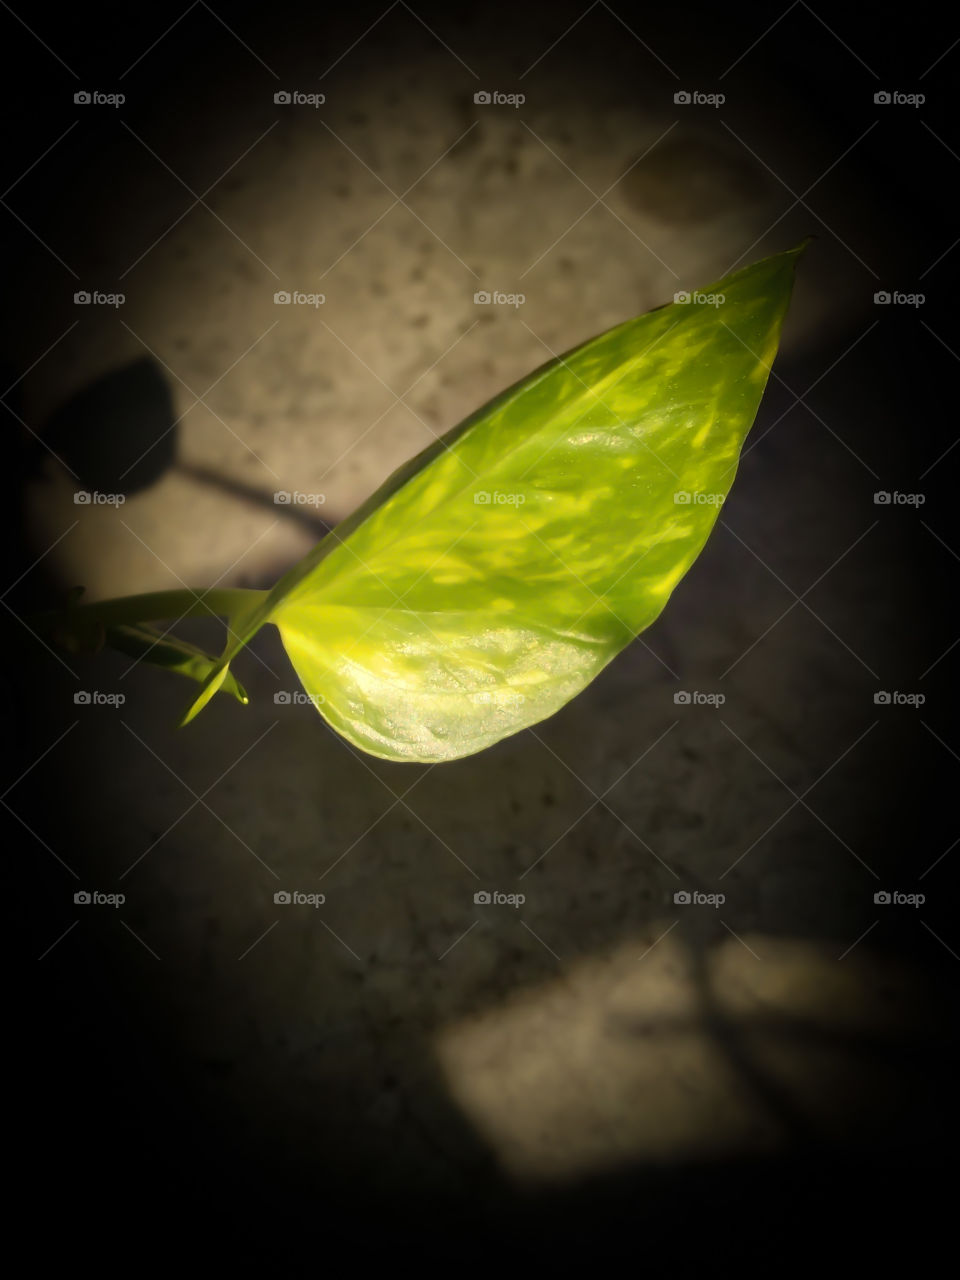 Title- A single ray of hope
Description- Green leaf,money plant leaf,light,shadow